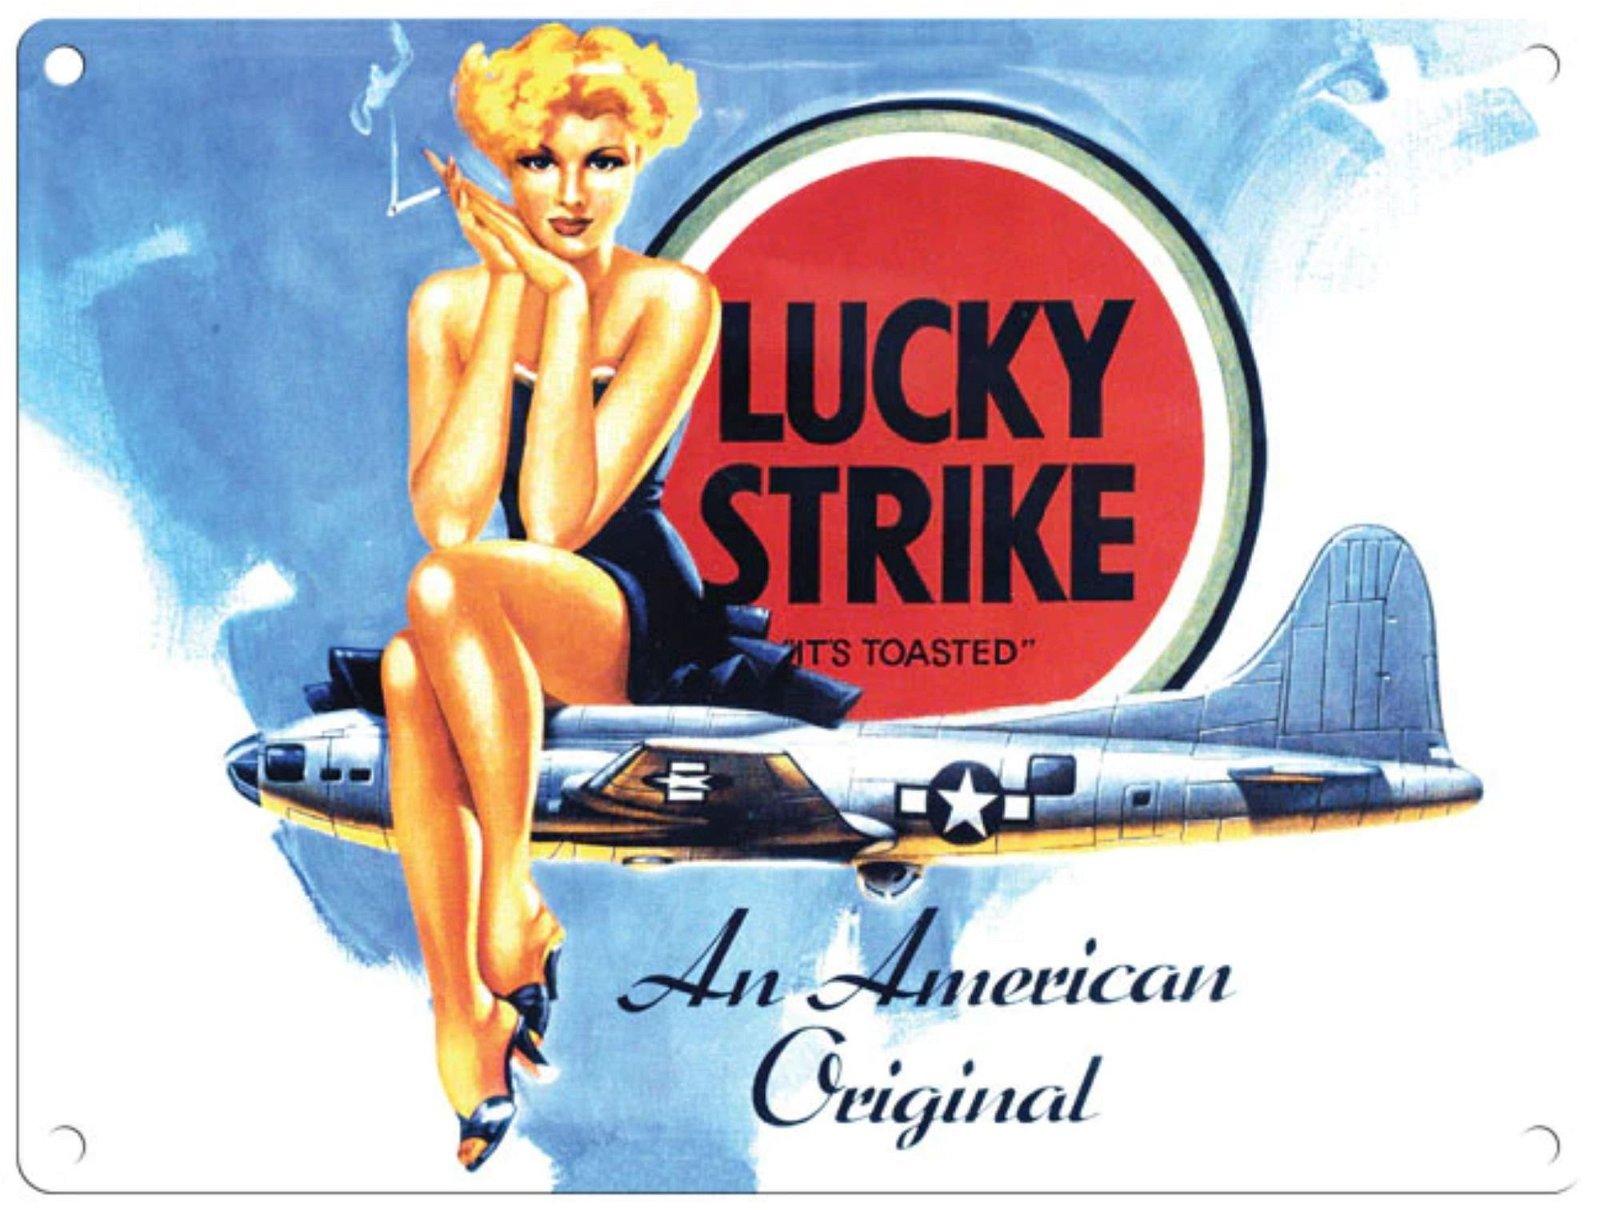 Small Metal Sign 45 x 37.5cm Vintage Retro Lucky Strike Cigarettes-